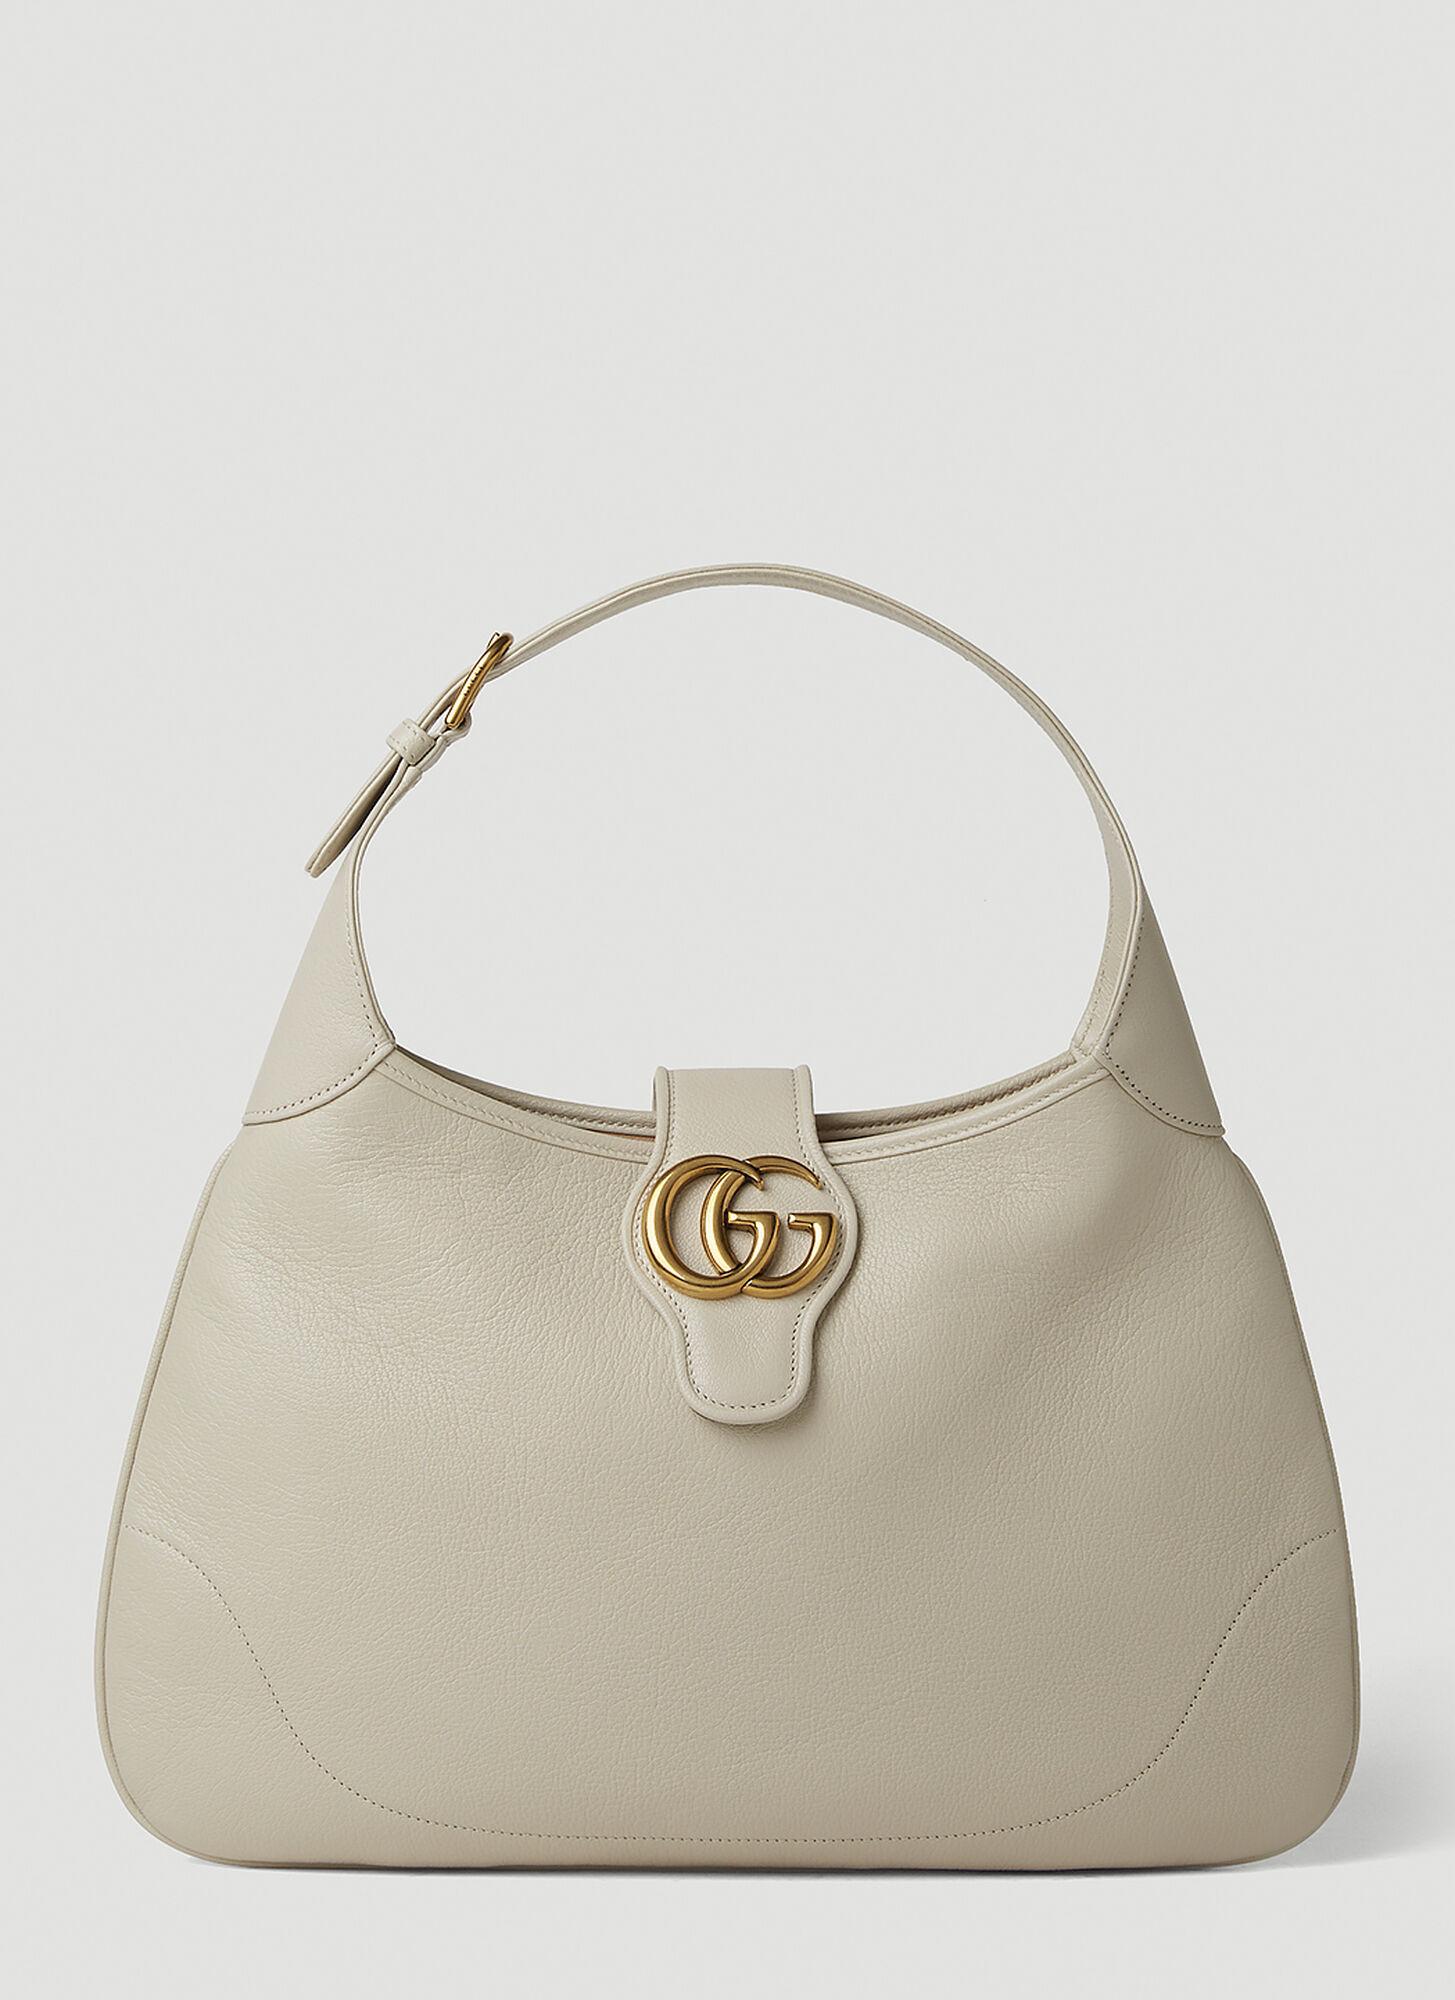 Gucci Aphrodite Medium Hobo Shoulder Bag in Natural | Lyst